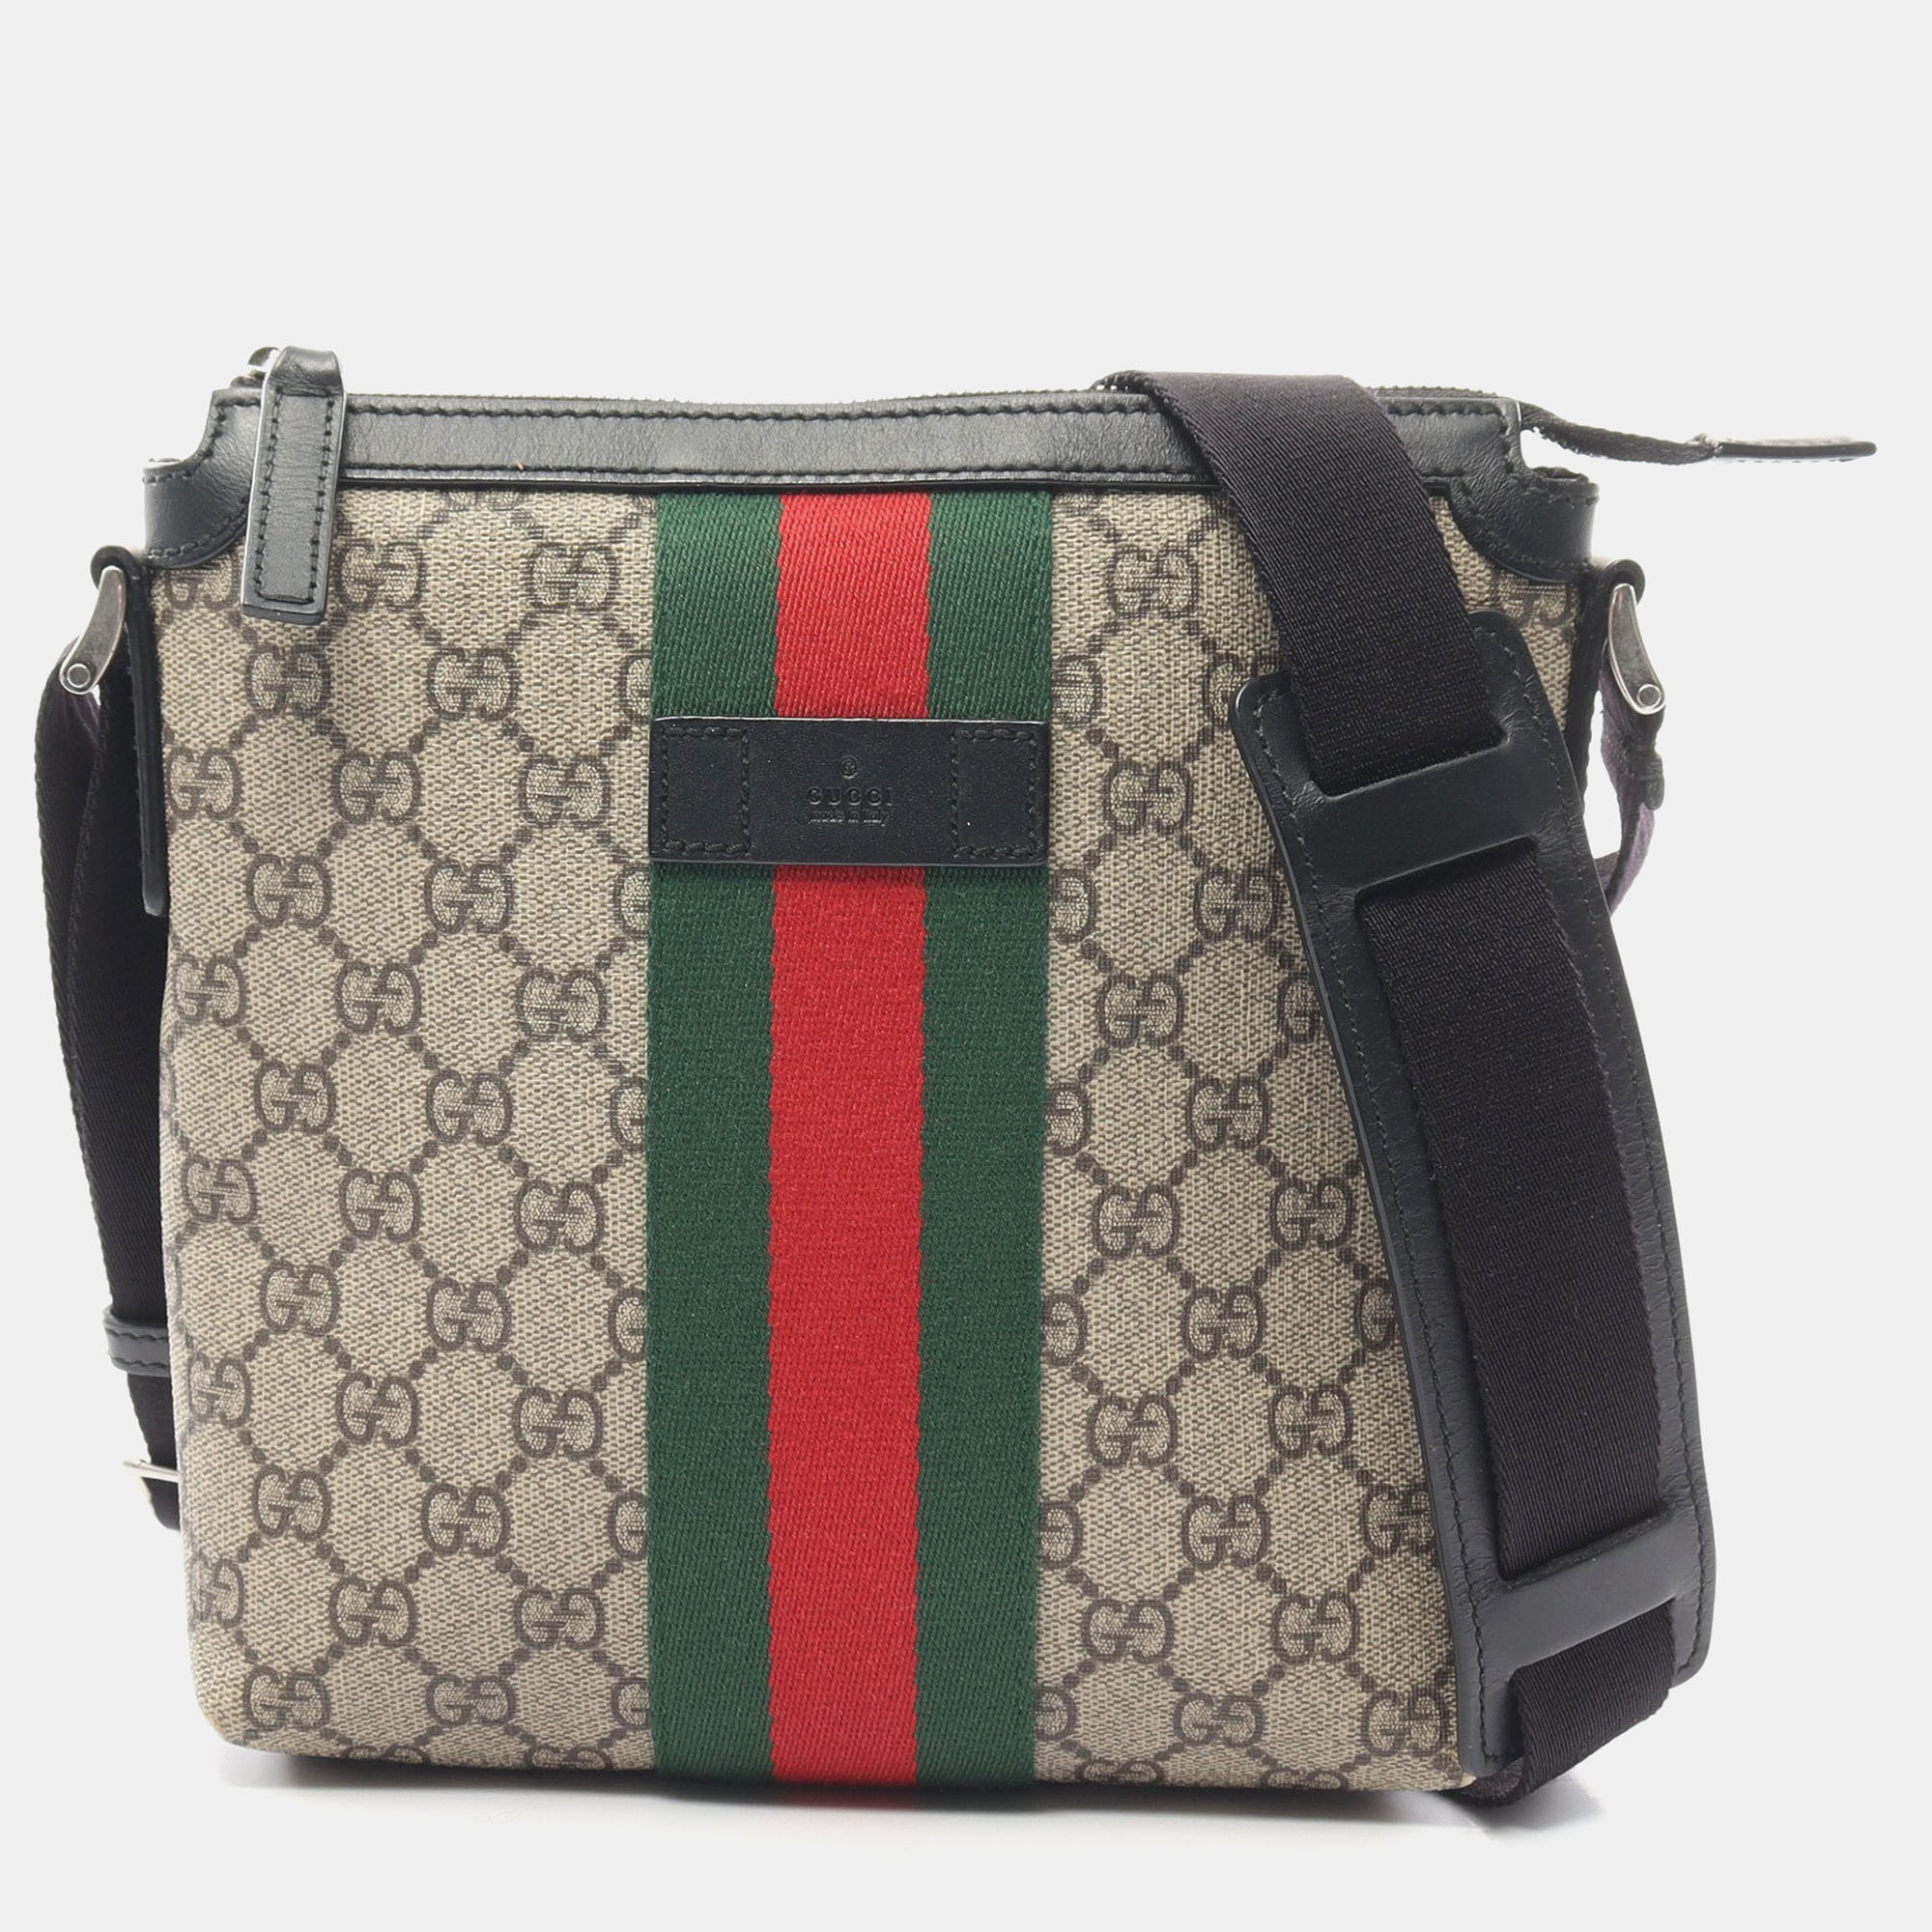 Pre-owned Gucci Gg Supreme Sherry Line Shoulder Bag Pvc Leather Beige Multicolor